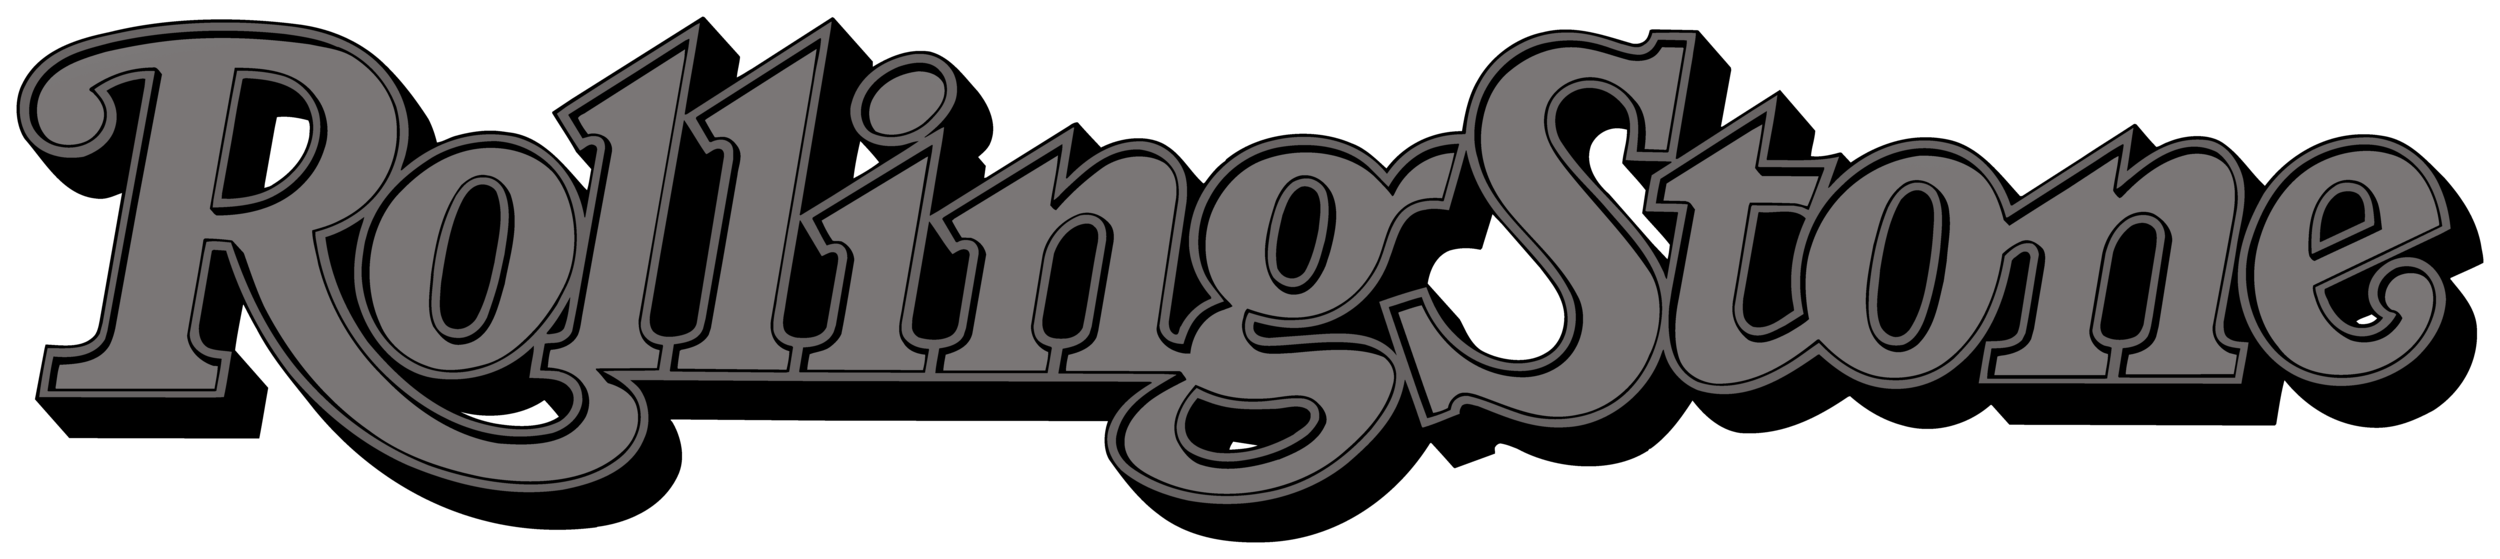 Rolling Stone Logo grey.png